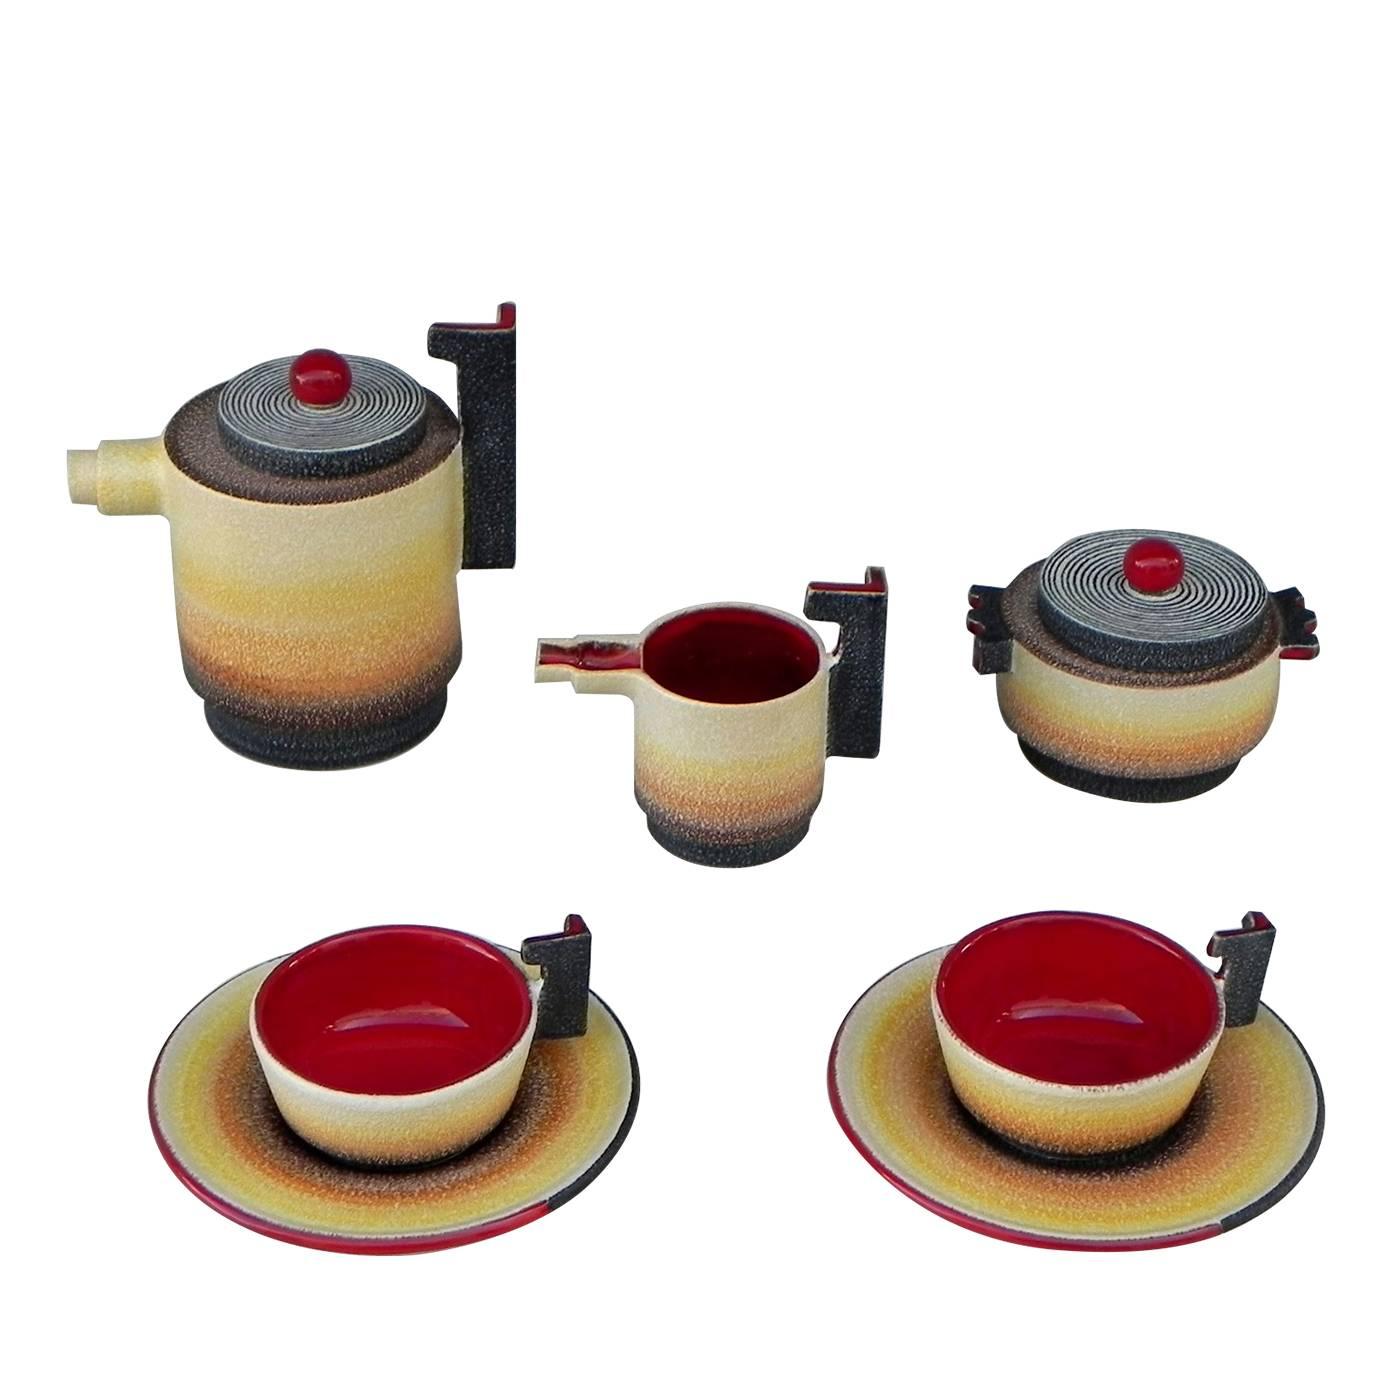 Diulgheroff Futurist Ceramic Tea Set for Two by Mazzotti, 1903